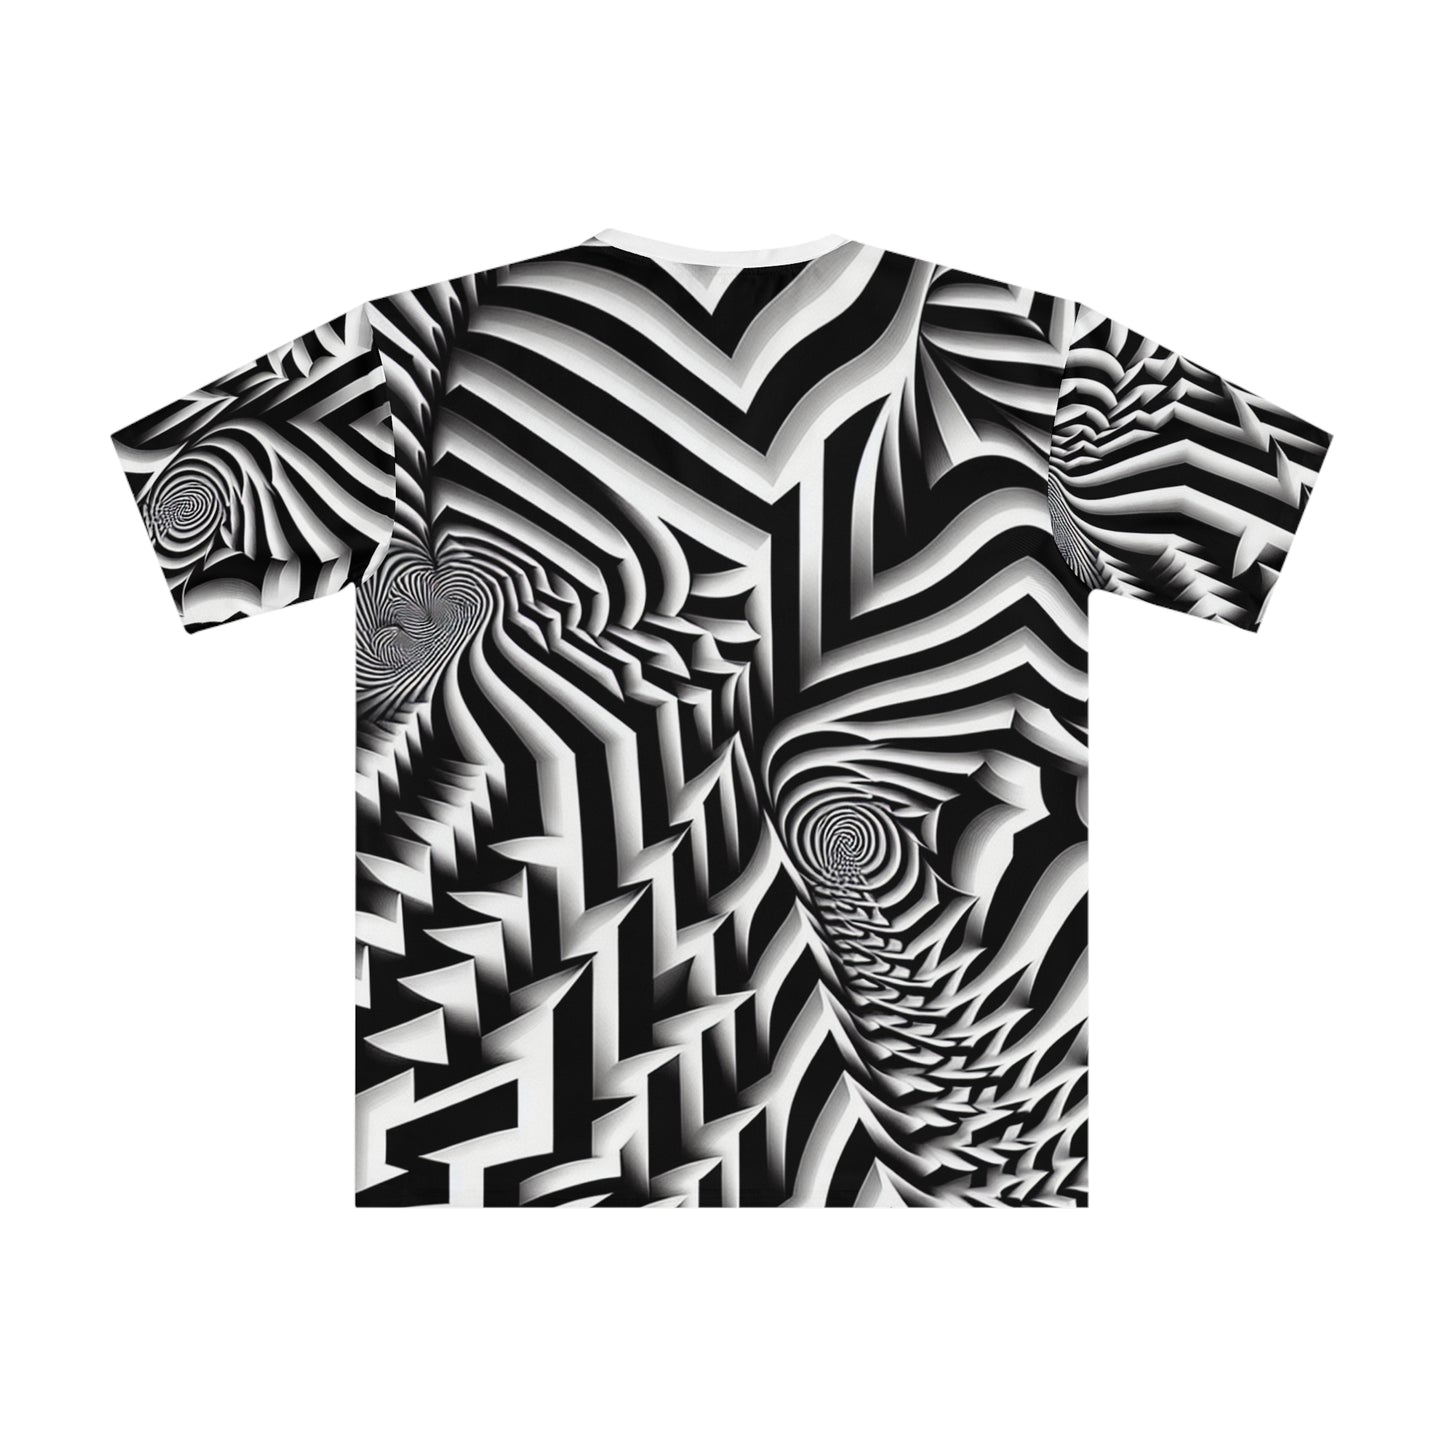 The Illusive - Men's T-shirt